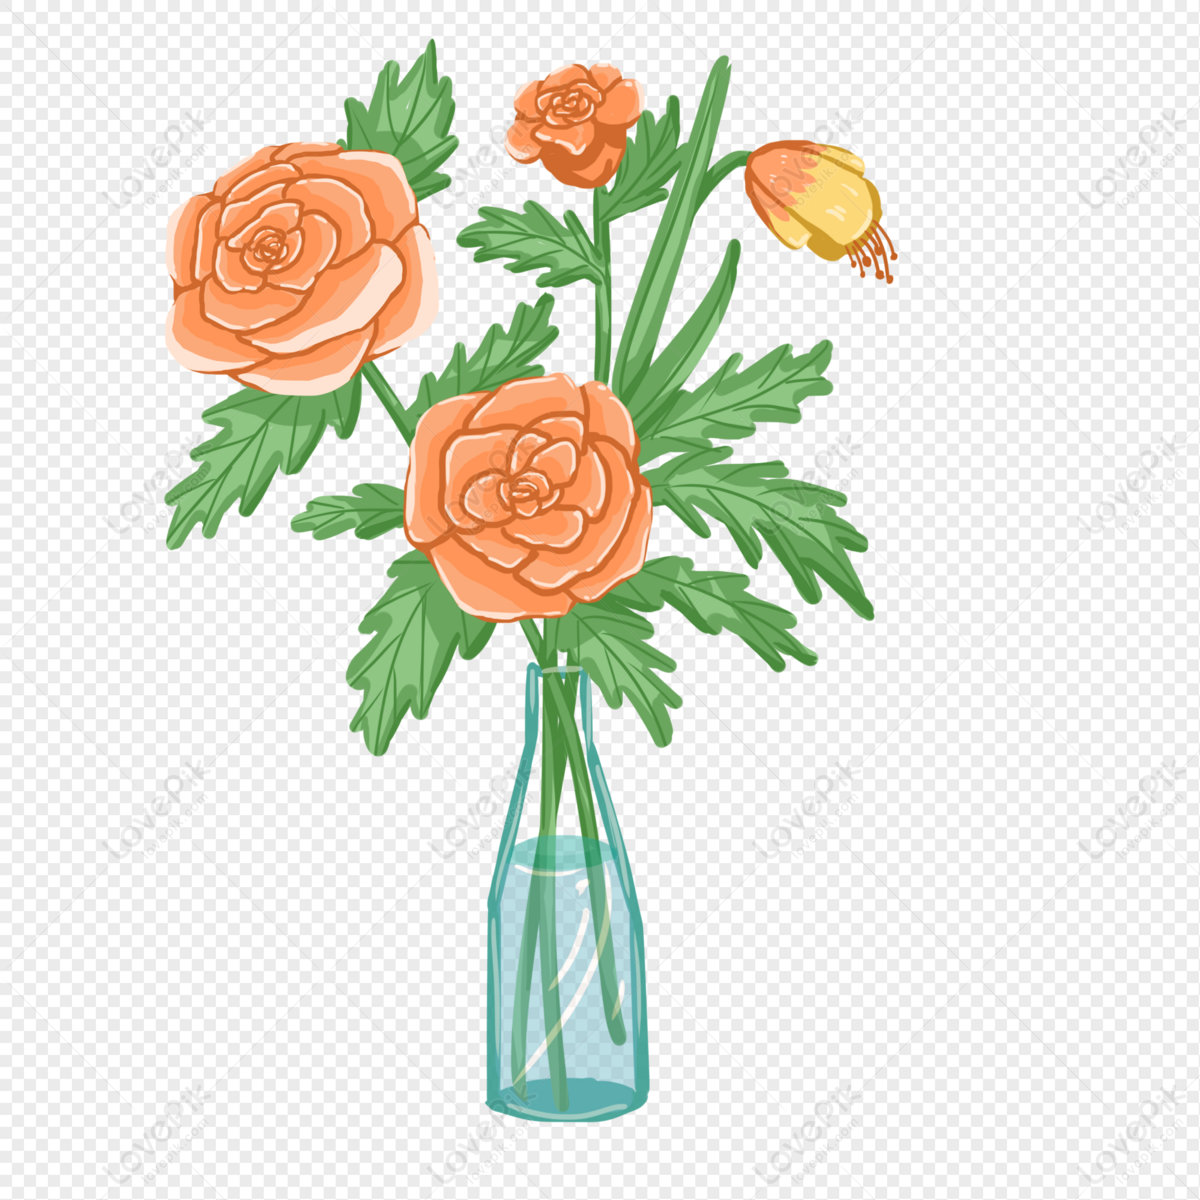 Flower Vase PNG Images With Transparent Background | Free Download ...